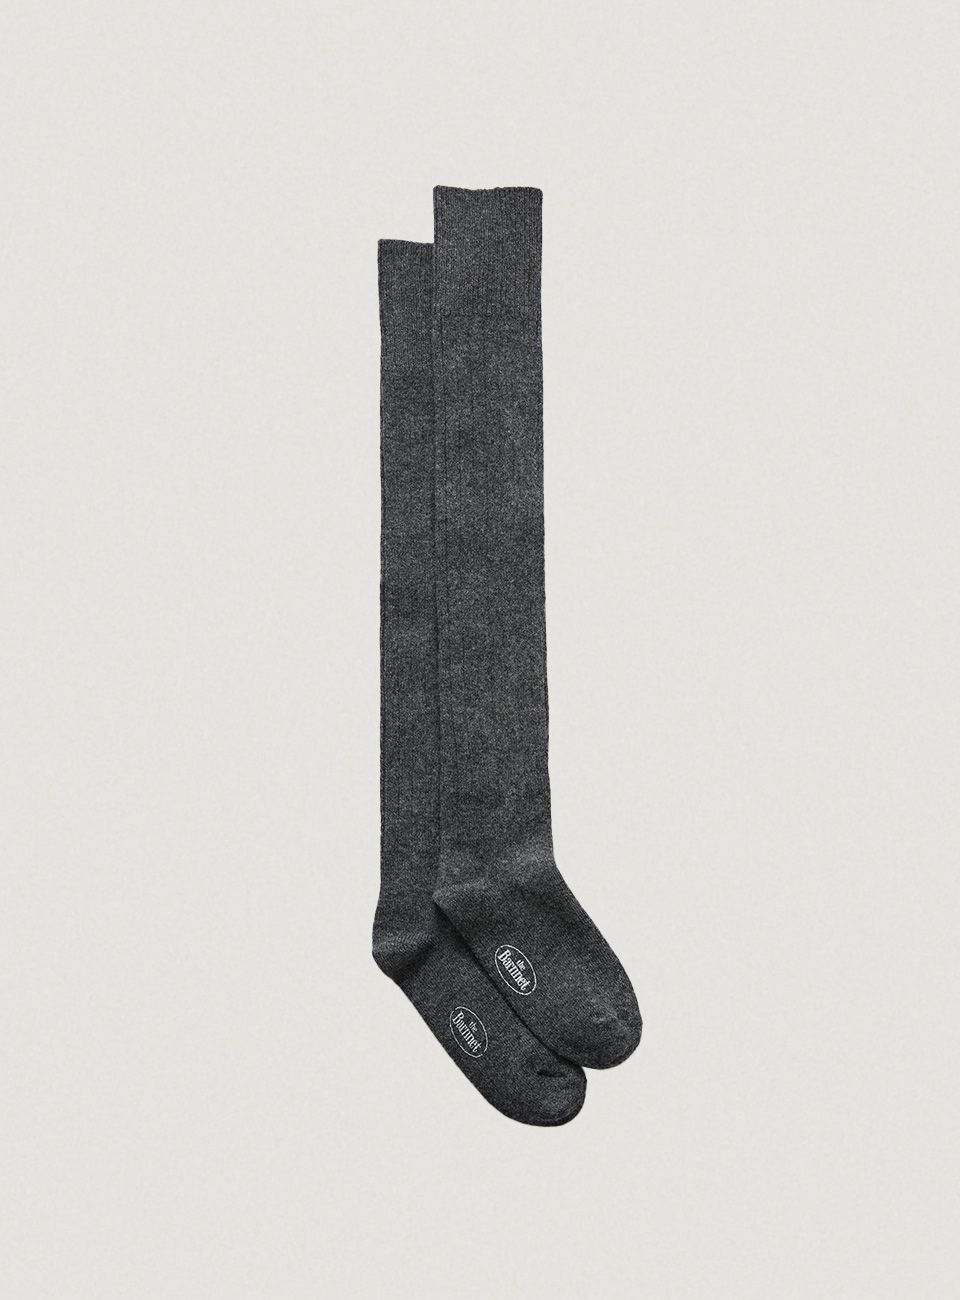 Knee-High Wool Knit Socks[1월 말 순차 배송]